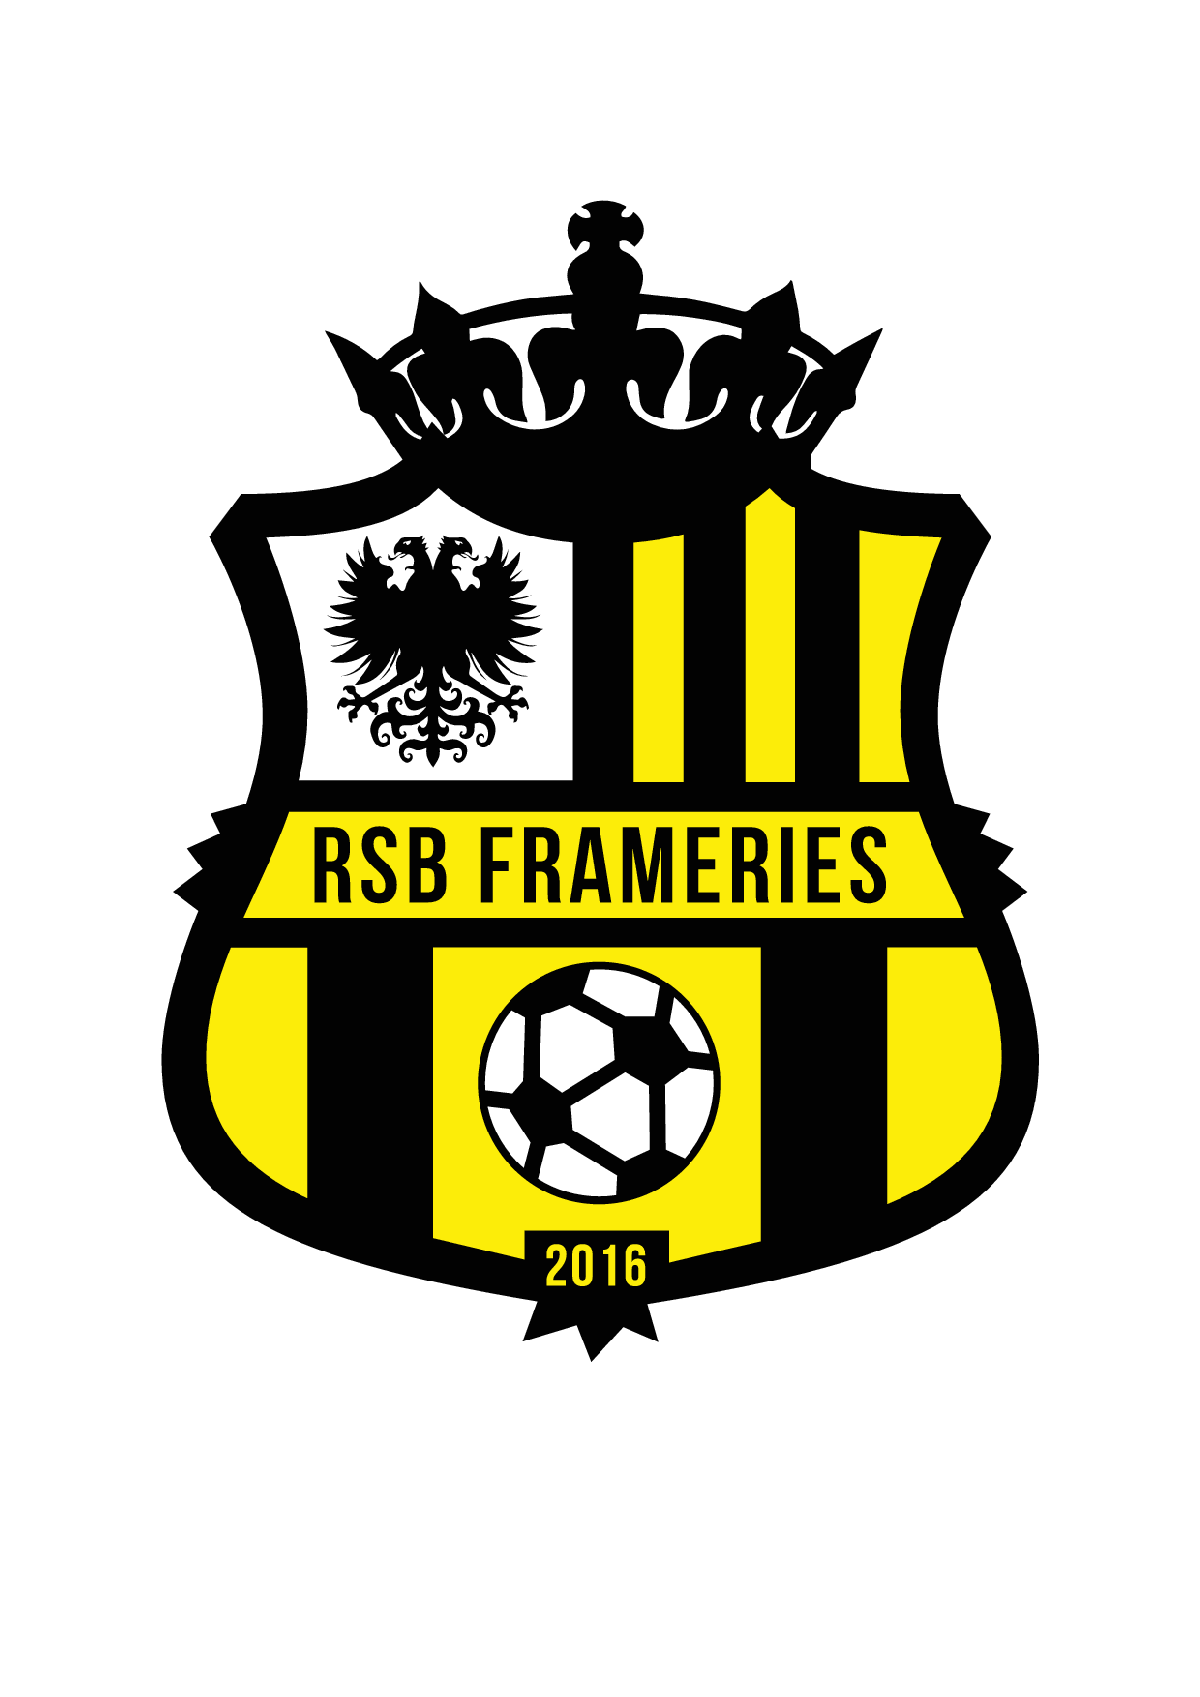 RSB Frameries